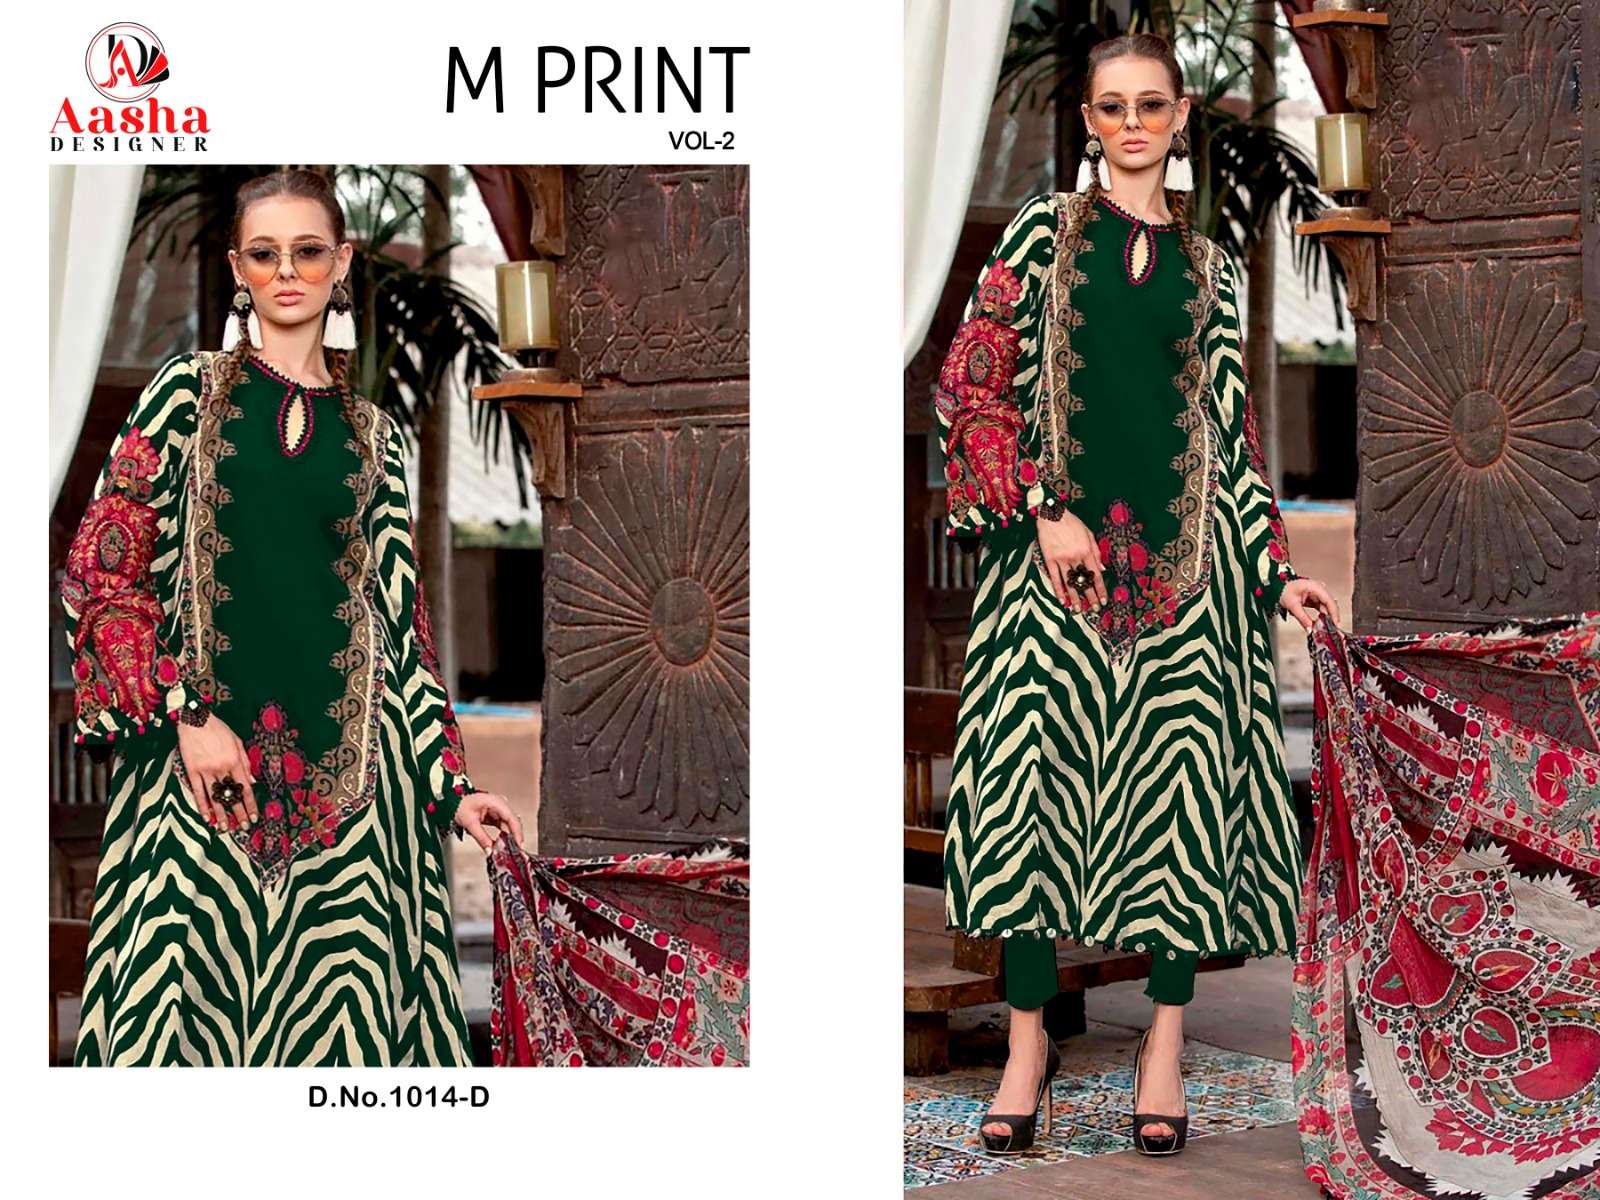 aasha designer m print vol-2 1014 colour series latest designer pakistani salwar kameez with cotton dupatta at wholesale price surat gujarat